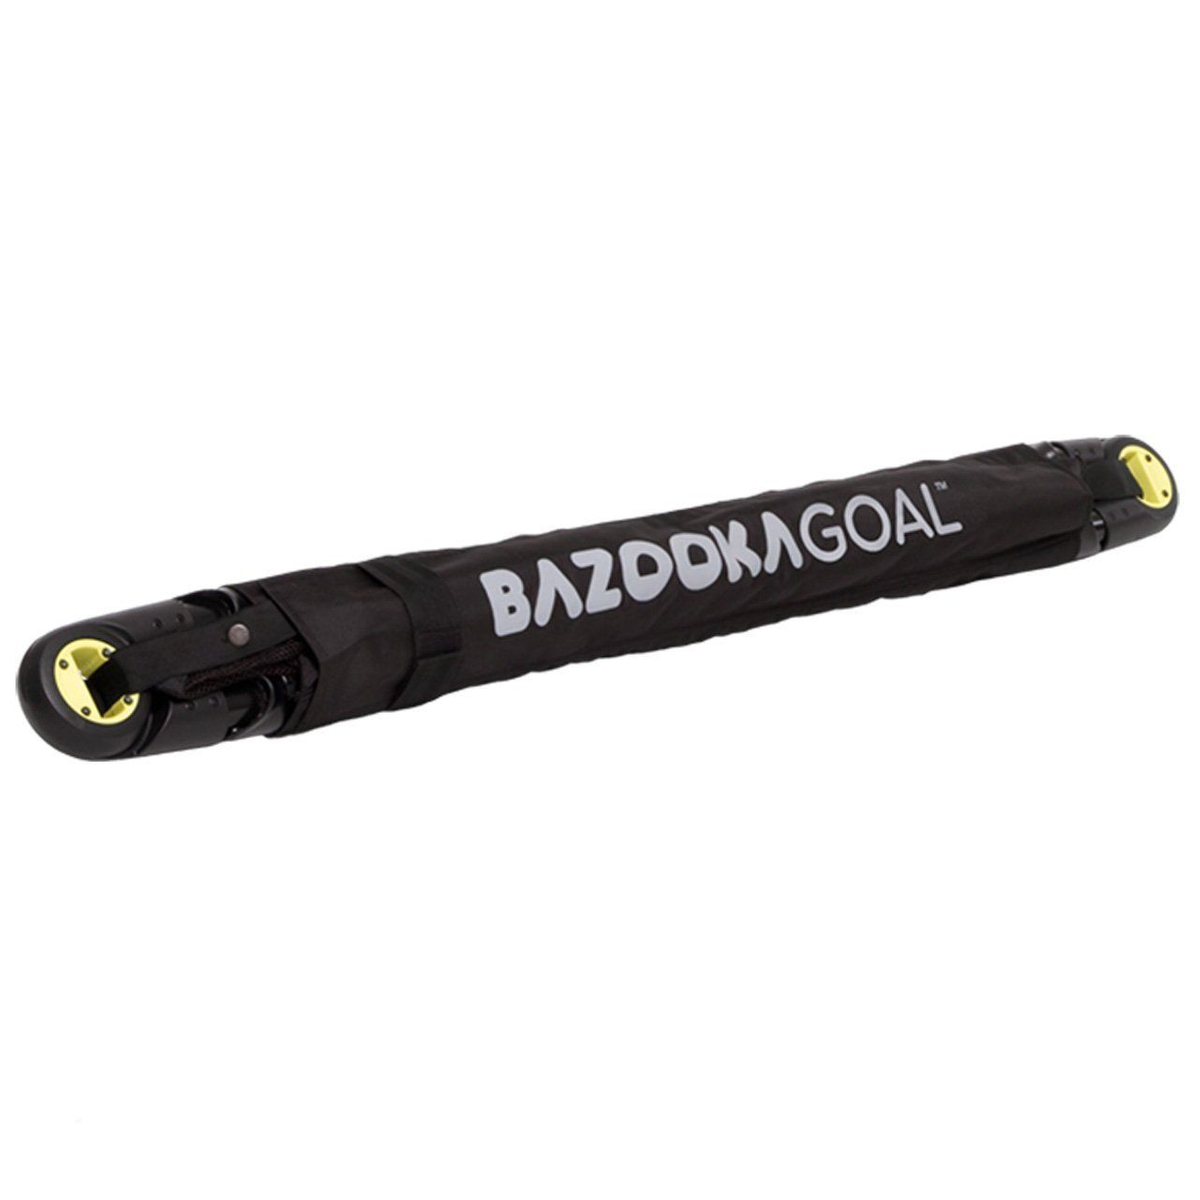 Bazooka Folding Goal 120x70 CM